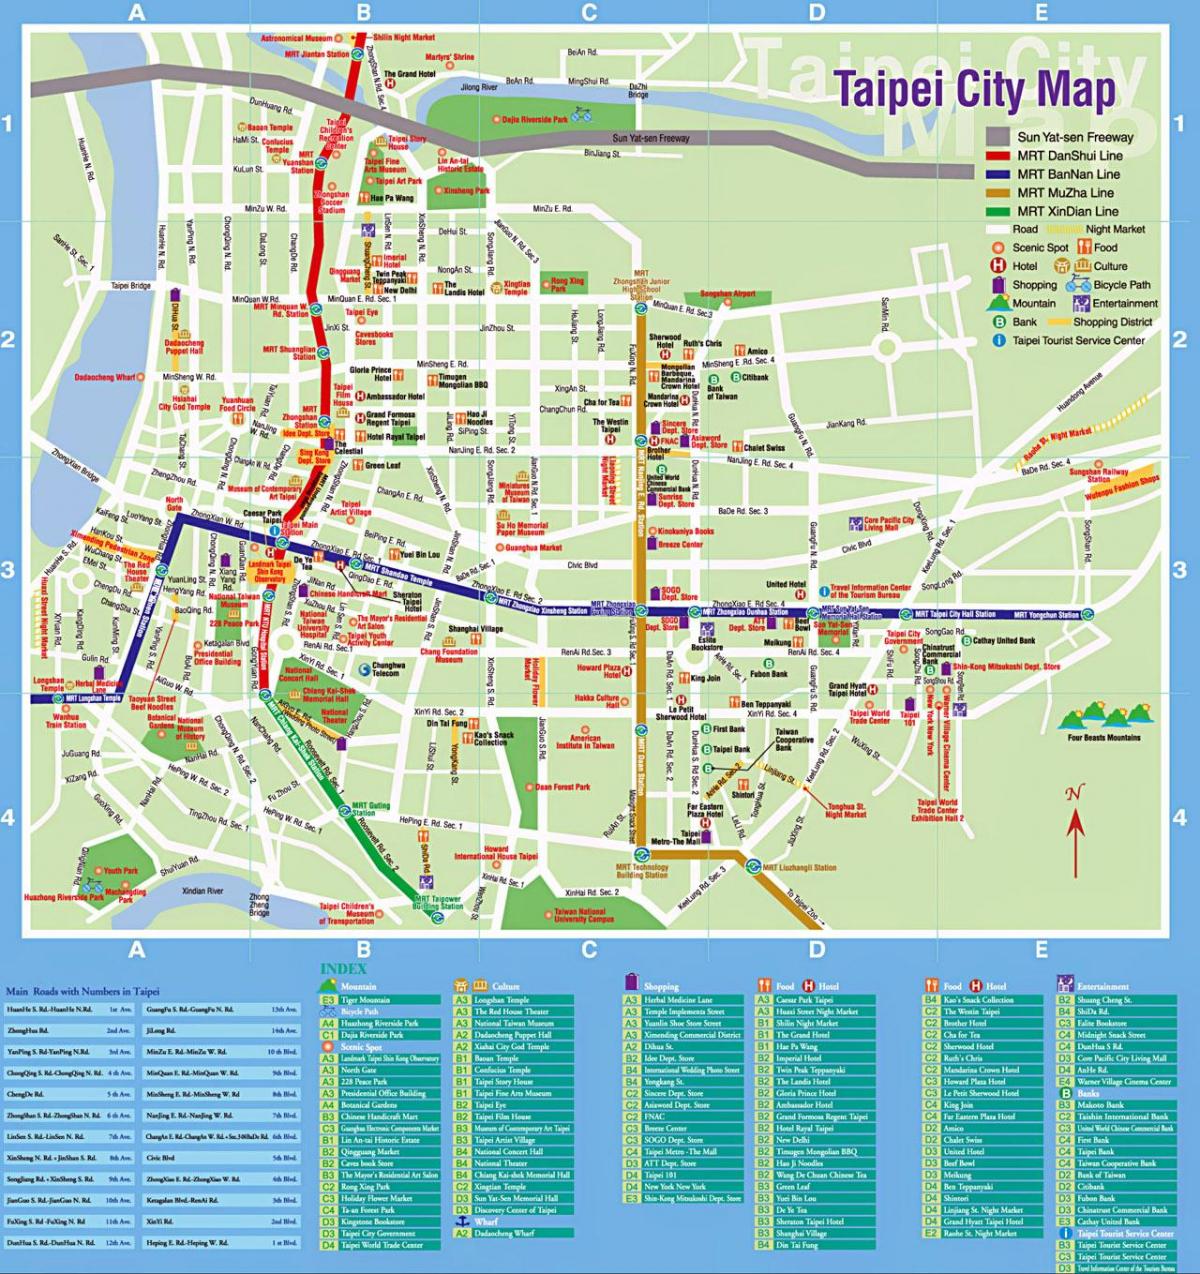 kat jeyografik nan Taipei city touris